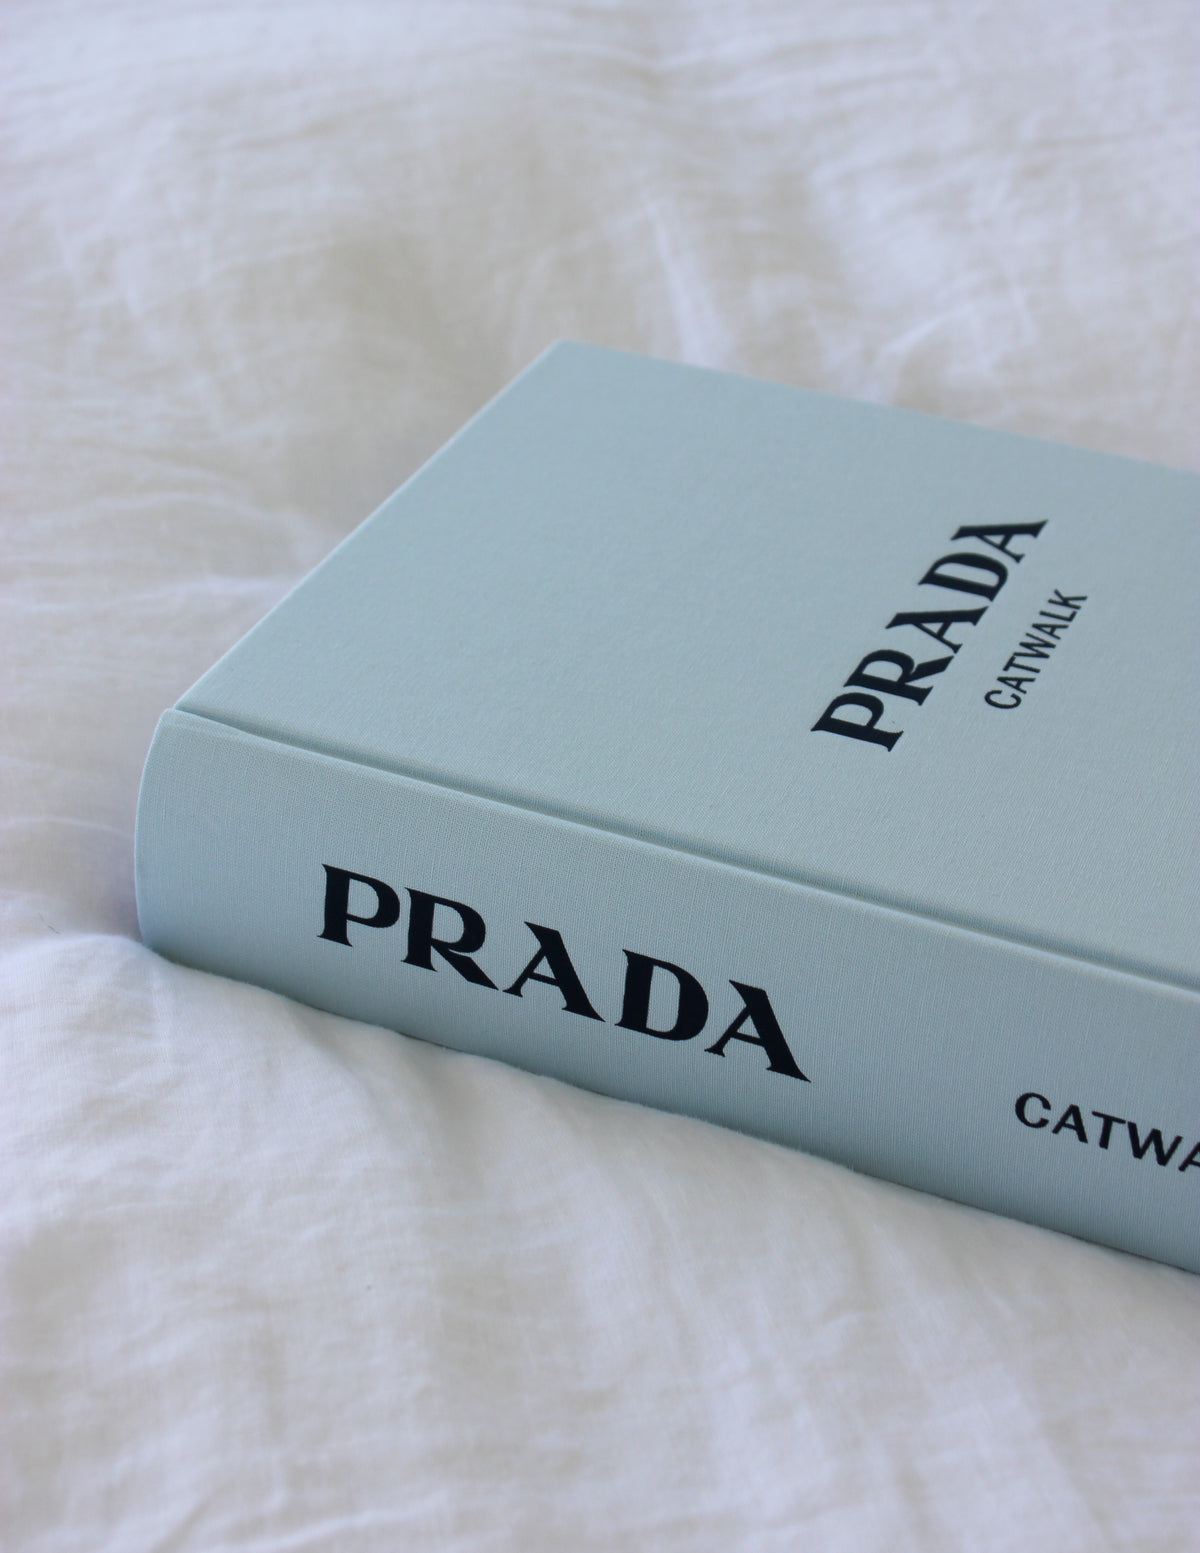 prada catwalk book